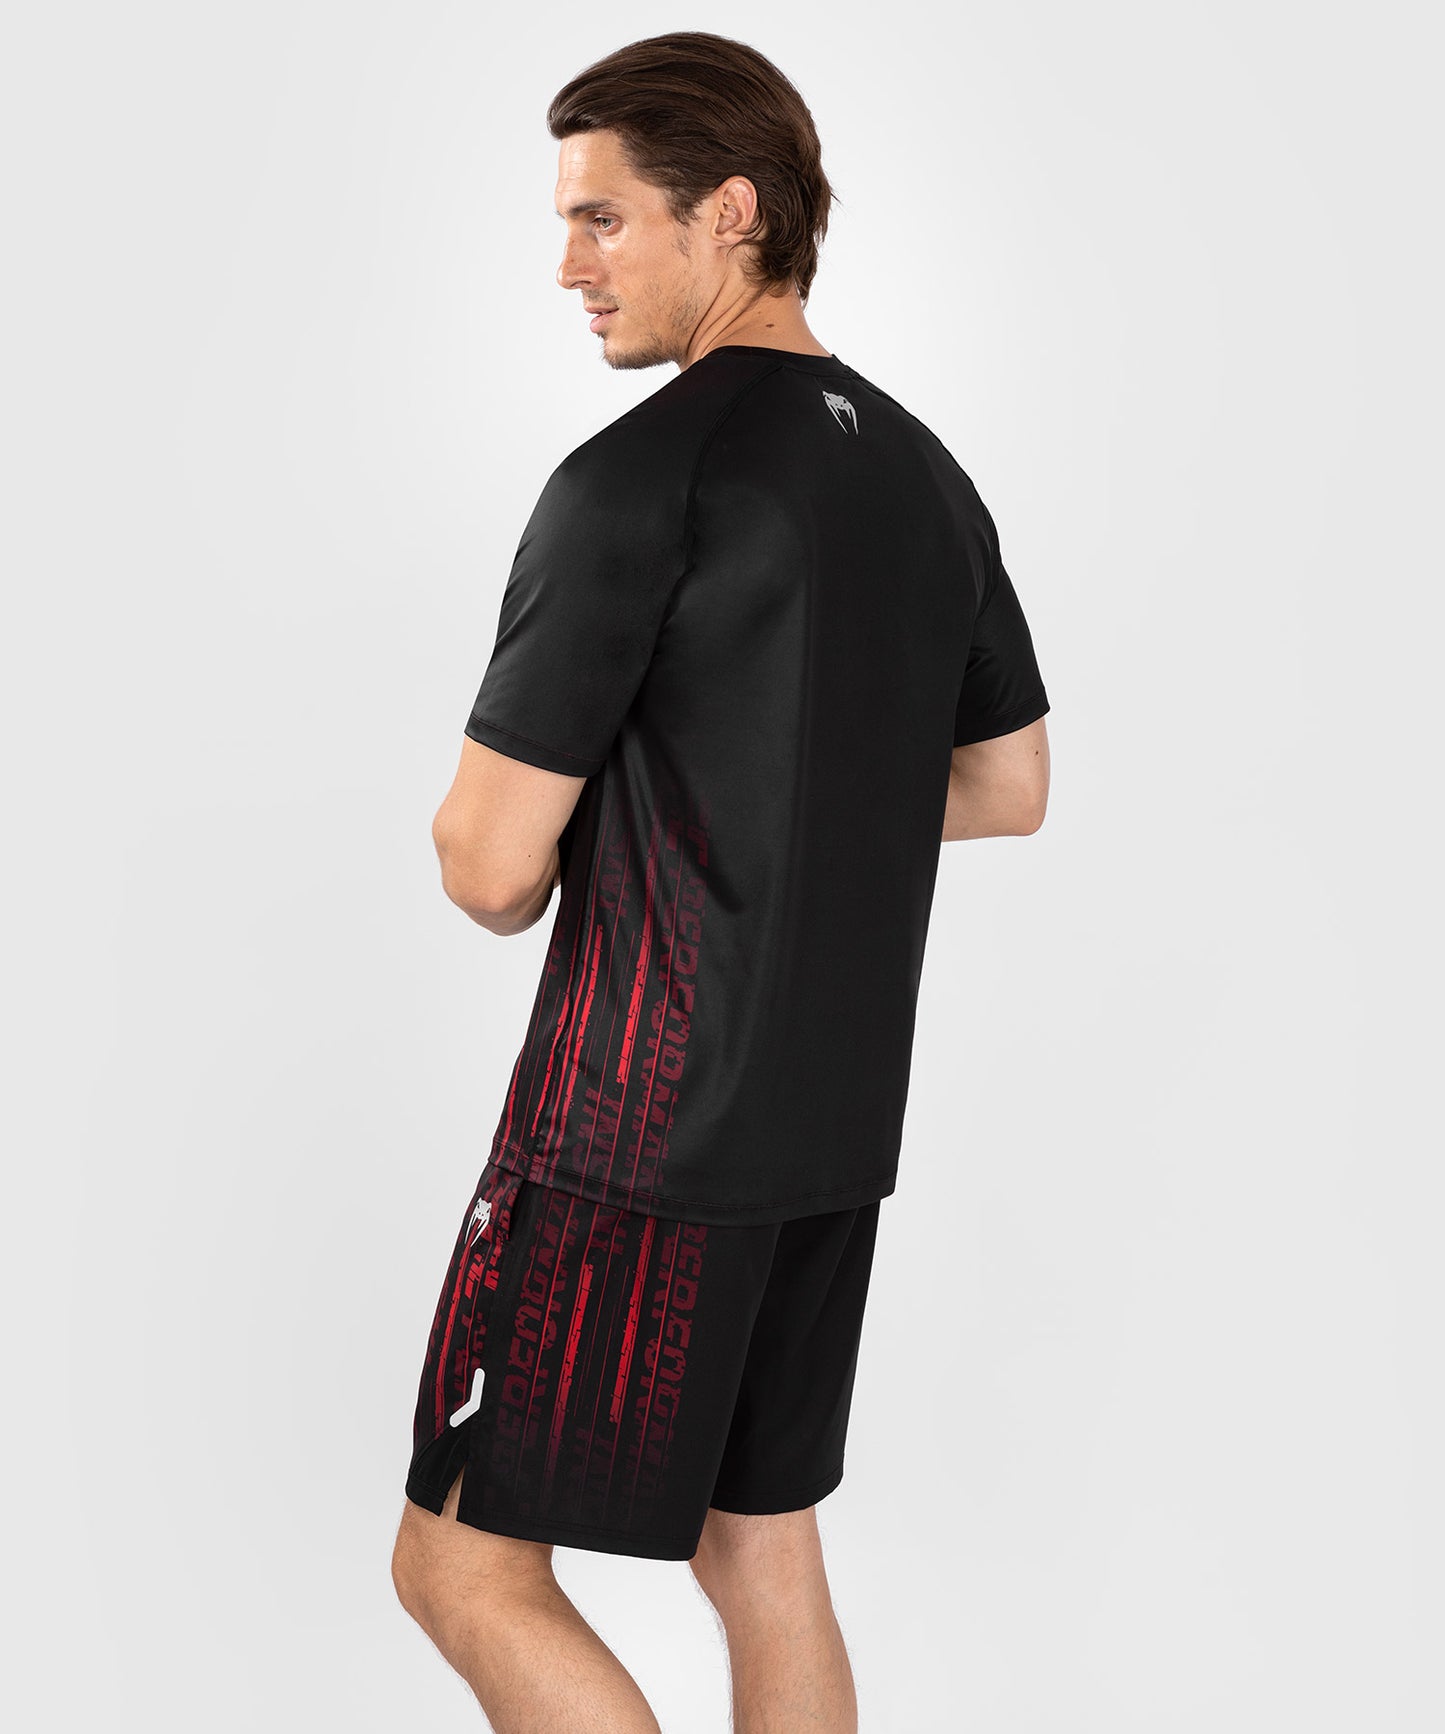 UFC Venum Performance Institute 2.0 Men’s Dry-Tech Shirt - Black/Red